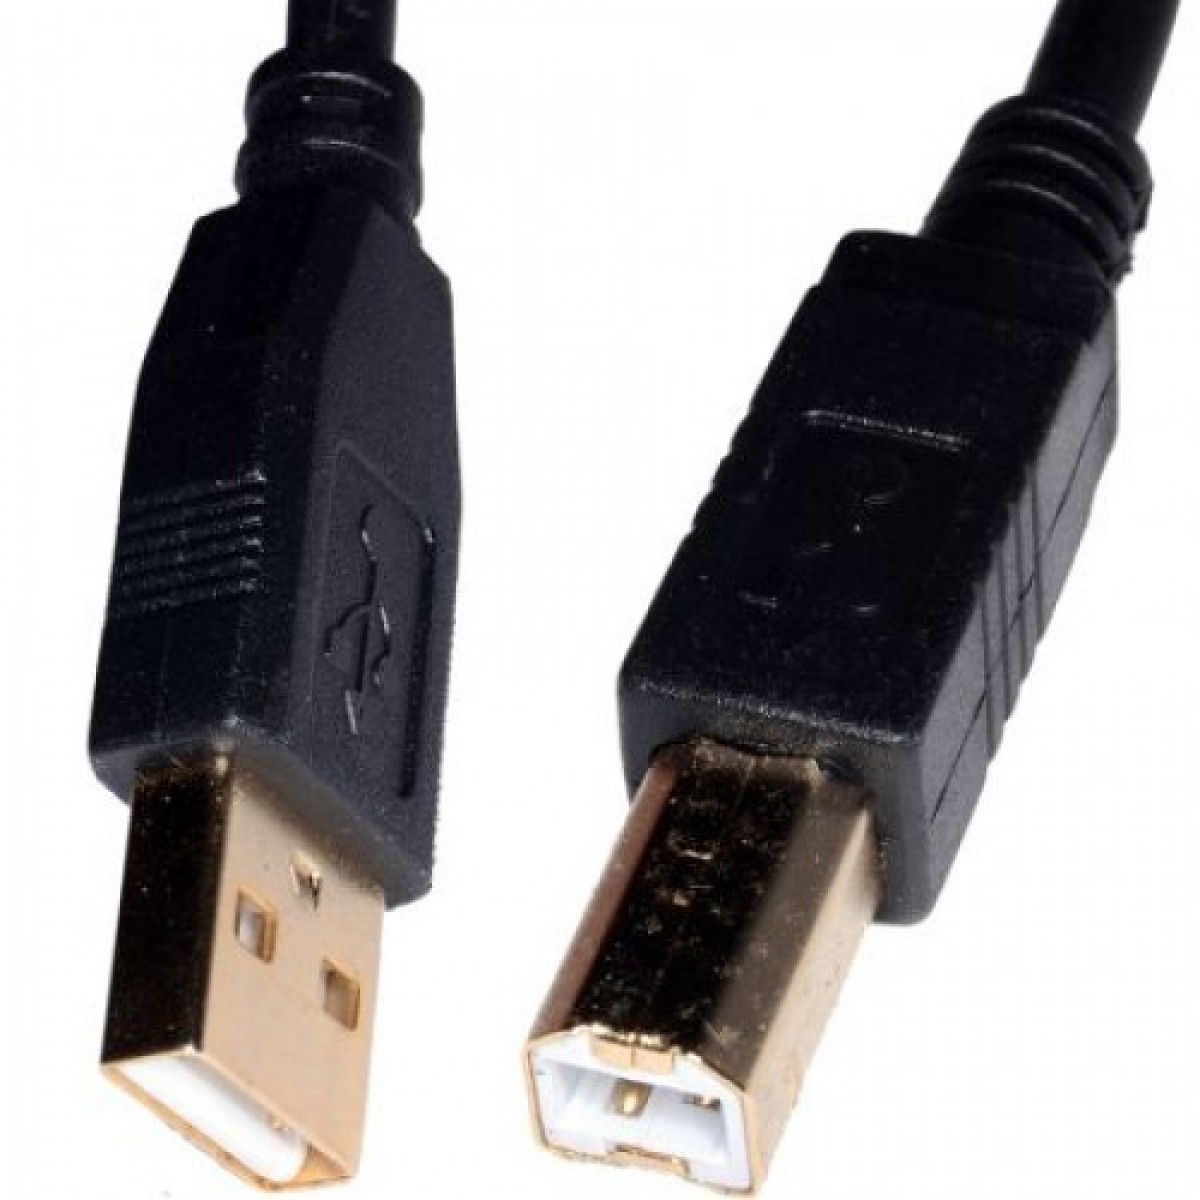 3m Black Usb Cable For Samsung Ml 2165 Printer Keple Com